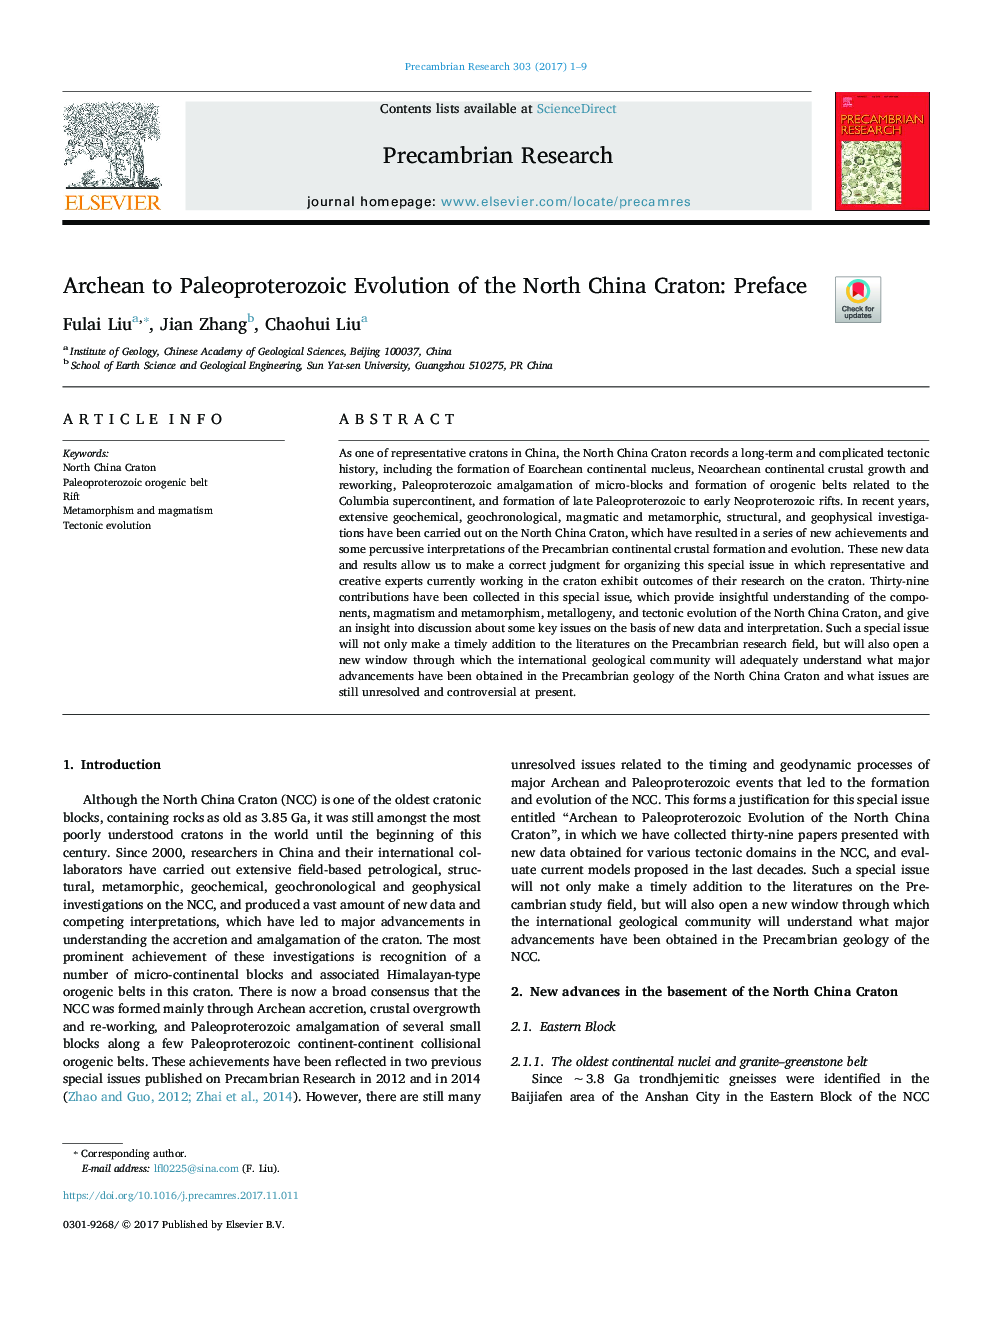 Archean to Paleoproterozoic Evolution of the North China Craton: Preface